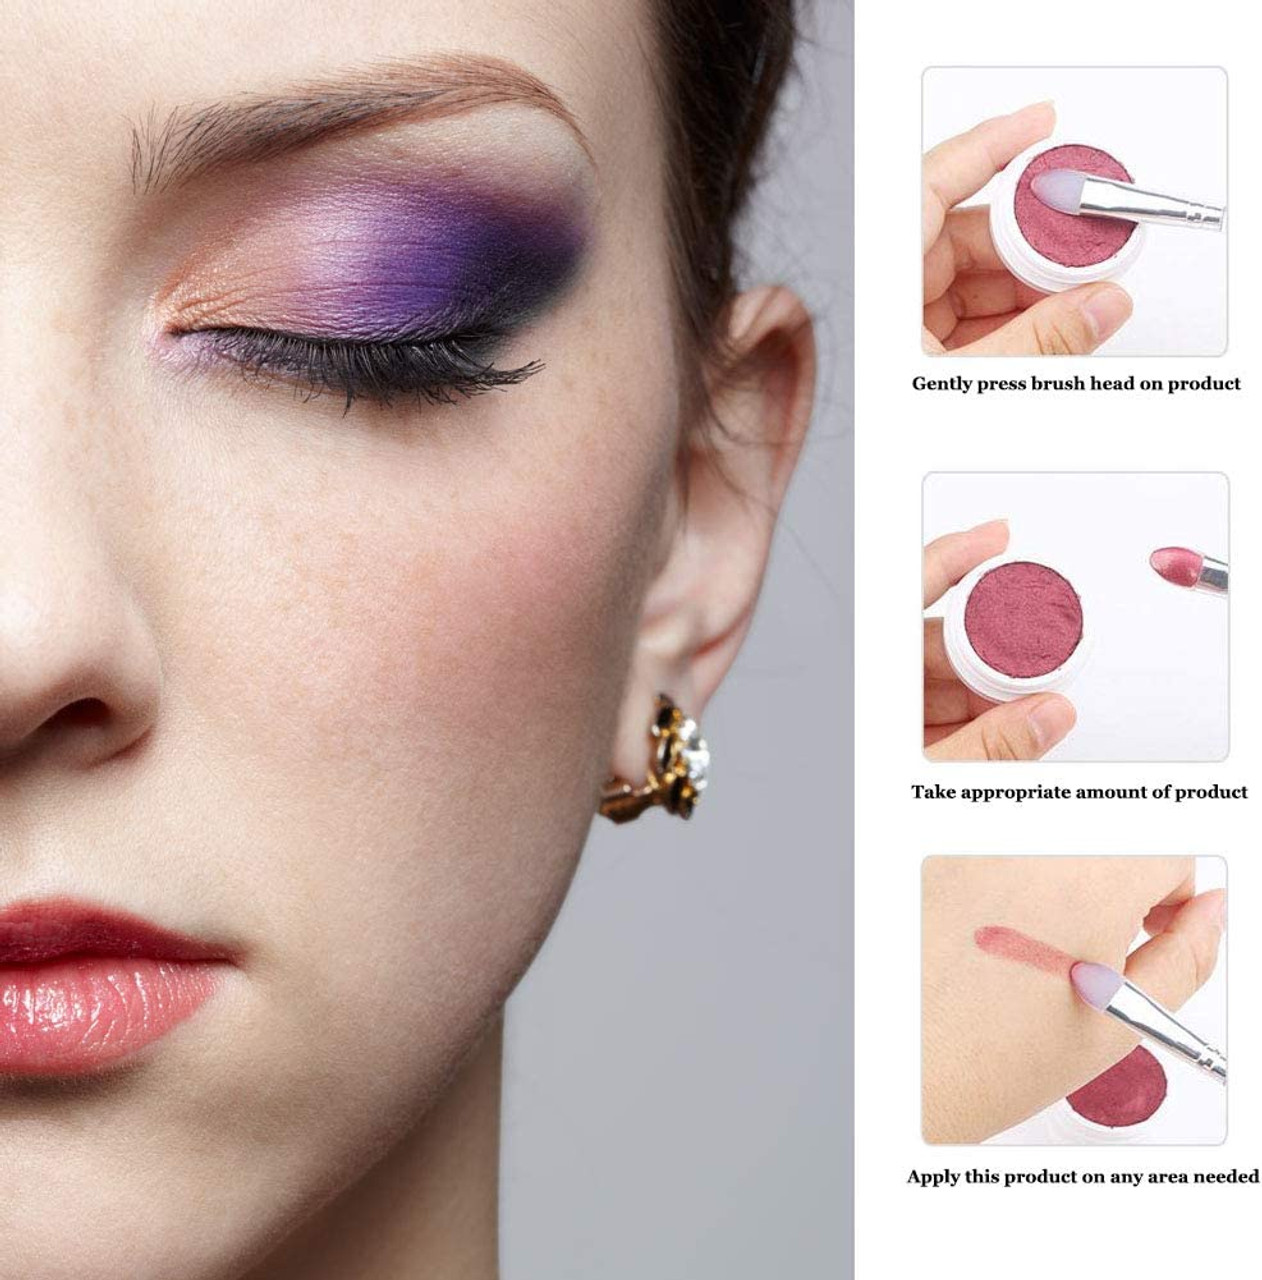 Lormay 9 Pcs Silicone Makeup Brush Set: Applicator for Face Mask, Eyeliner, Eyebrow, Eye Shadow, Lip Makeup and UV Epoxy Resin (Purple)